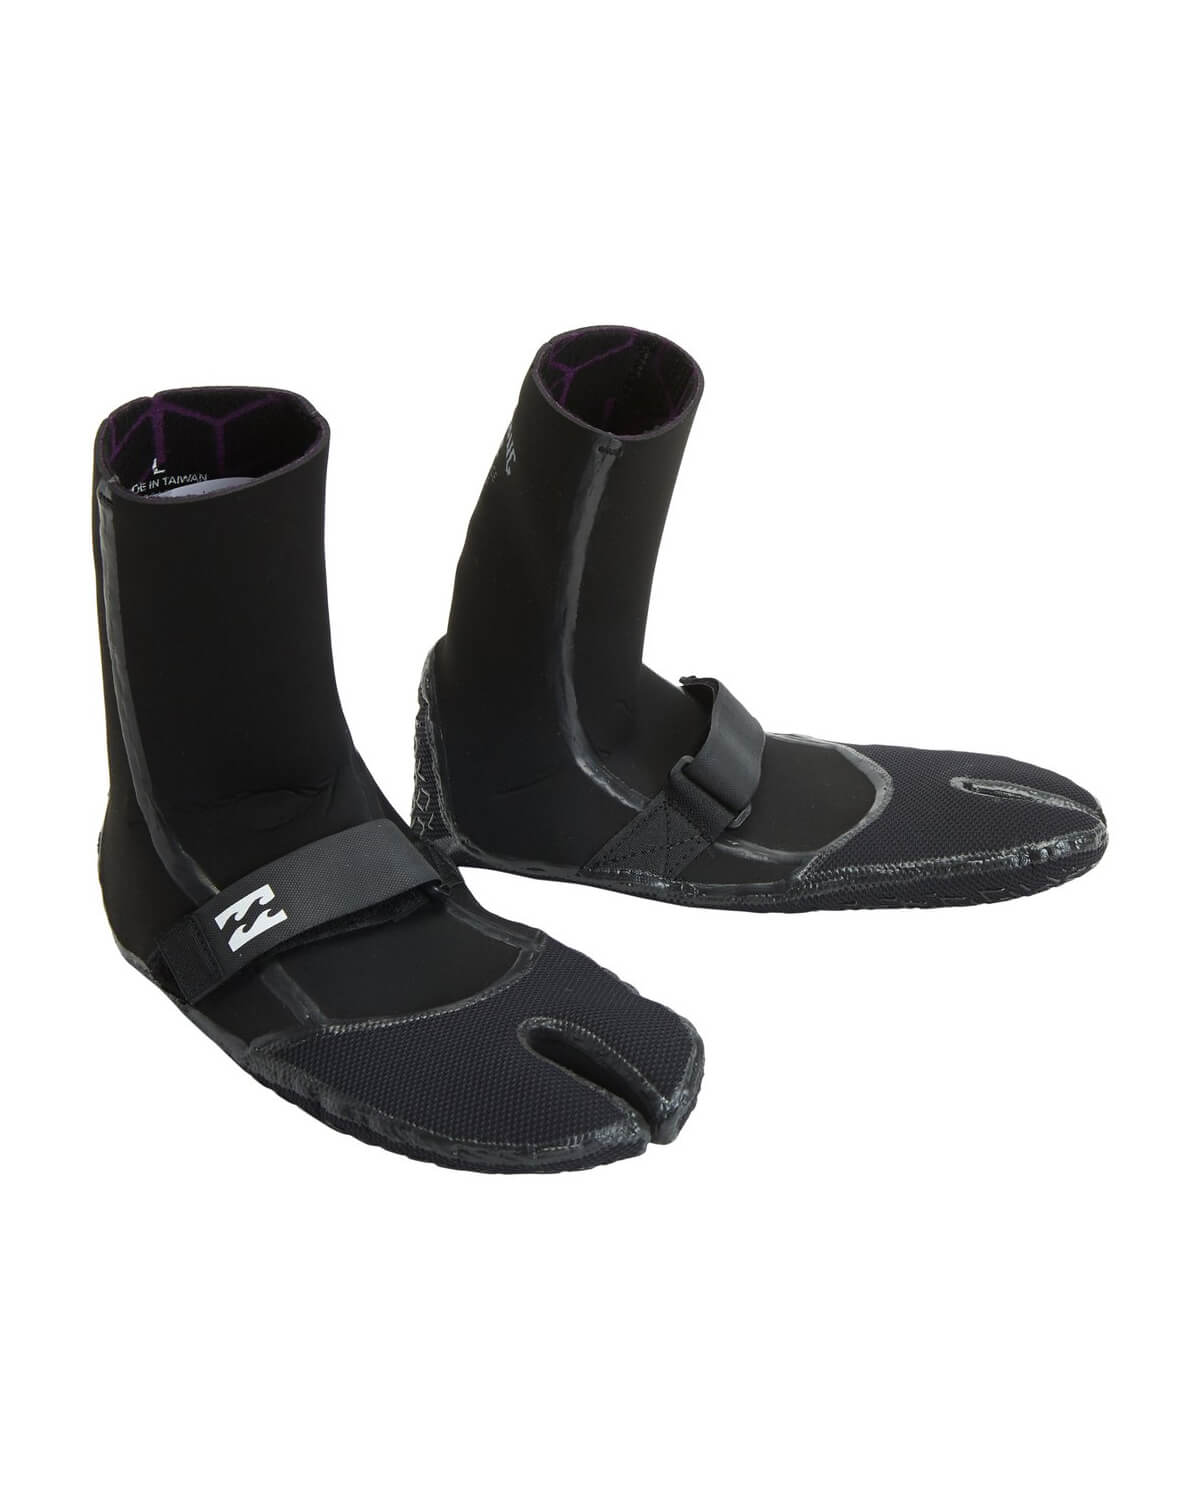 5mm Billabong FURNACE COMP Split Toe Wetsuit Boots - 2020